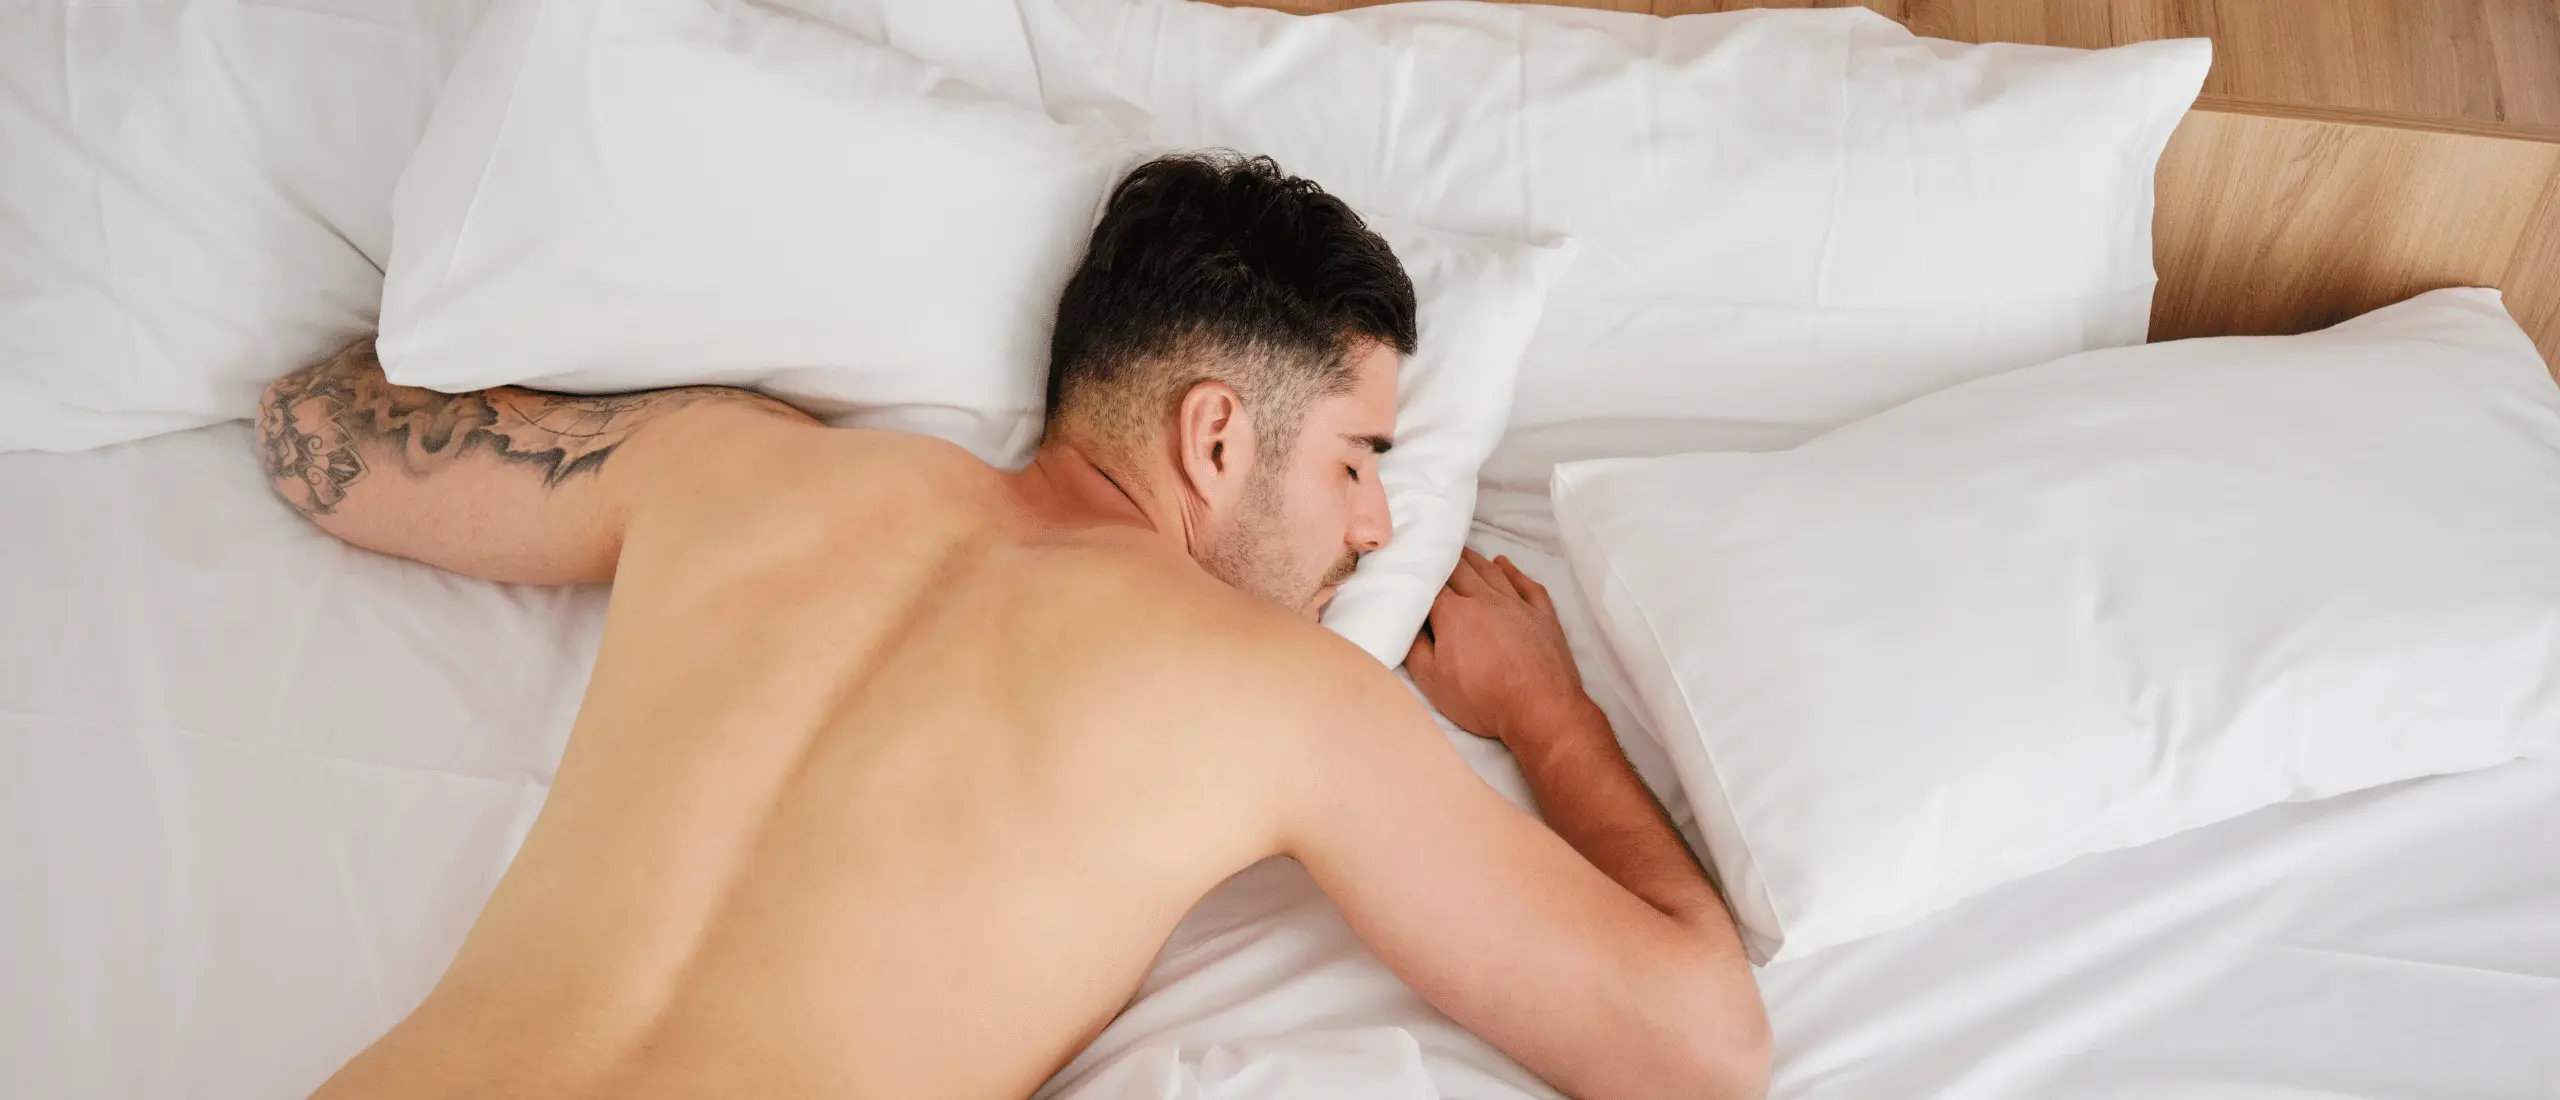 man sleeping in bed naked